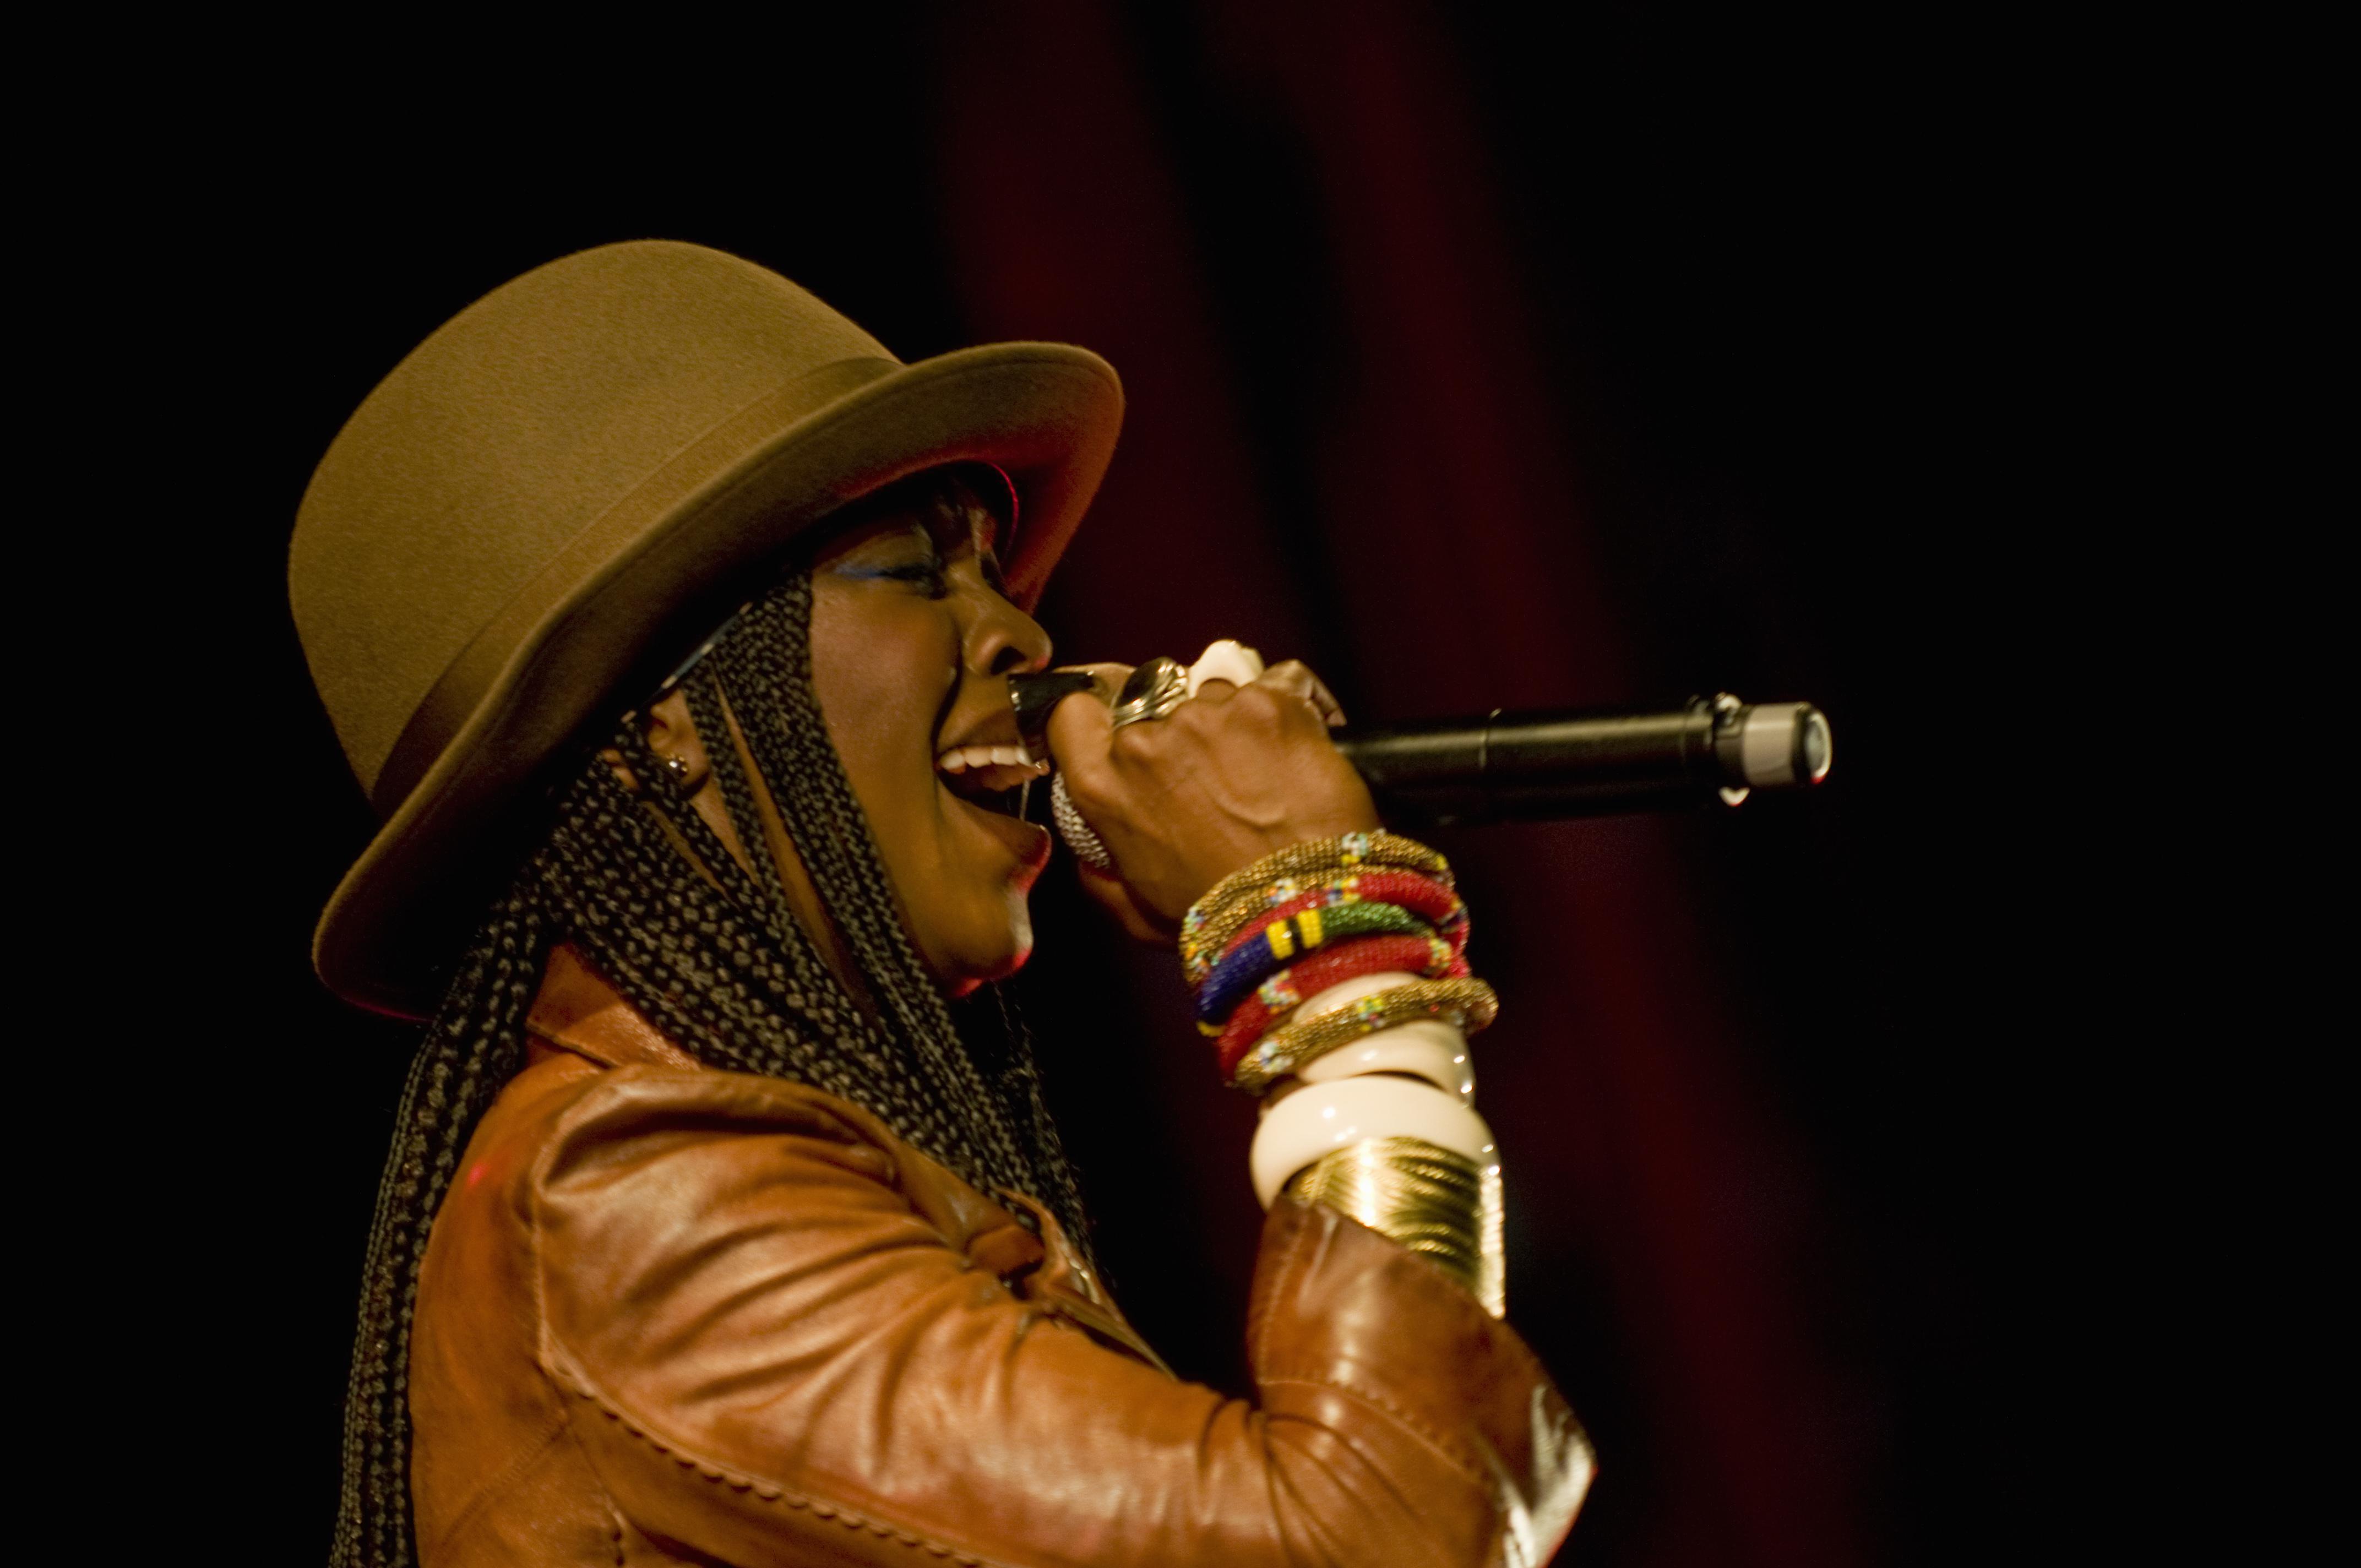 American recording artist Lauryn Hill performing at the Festival dos Oceanos, Praca do Comercio, Baixa.